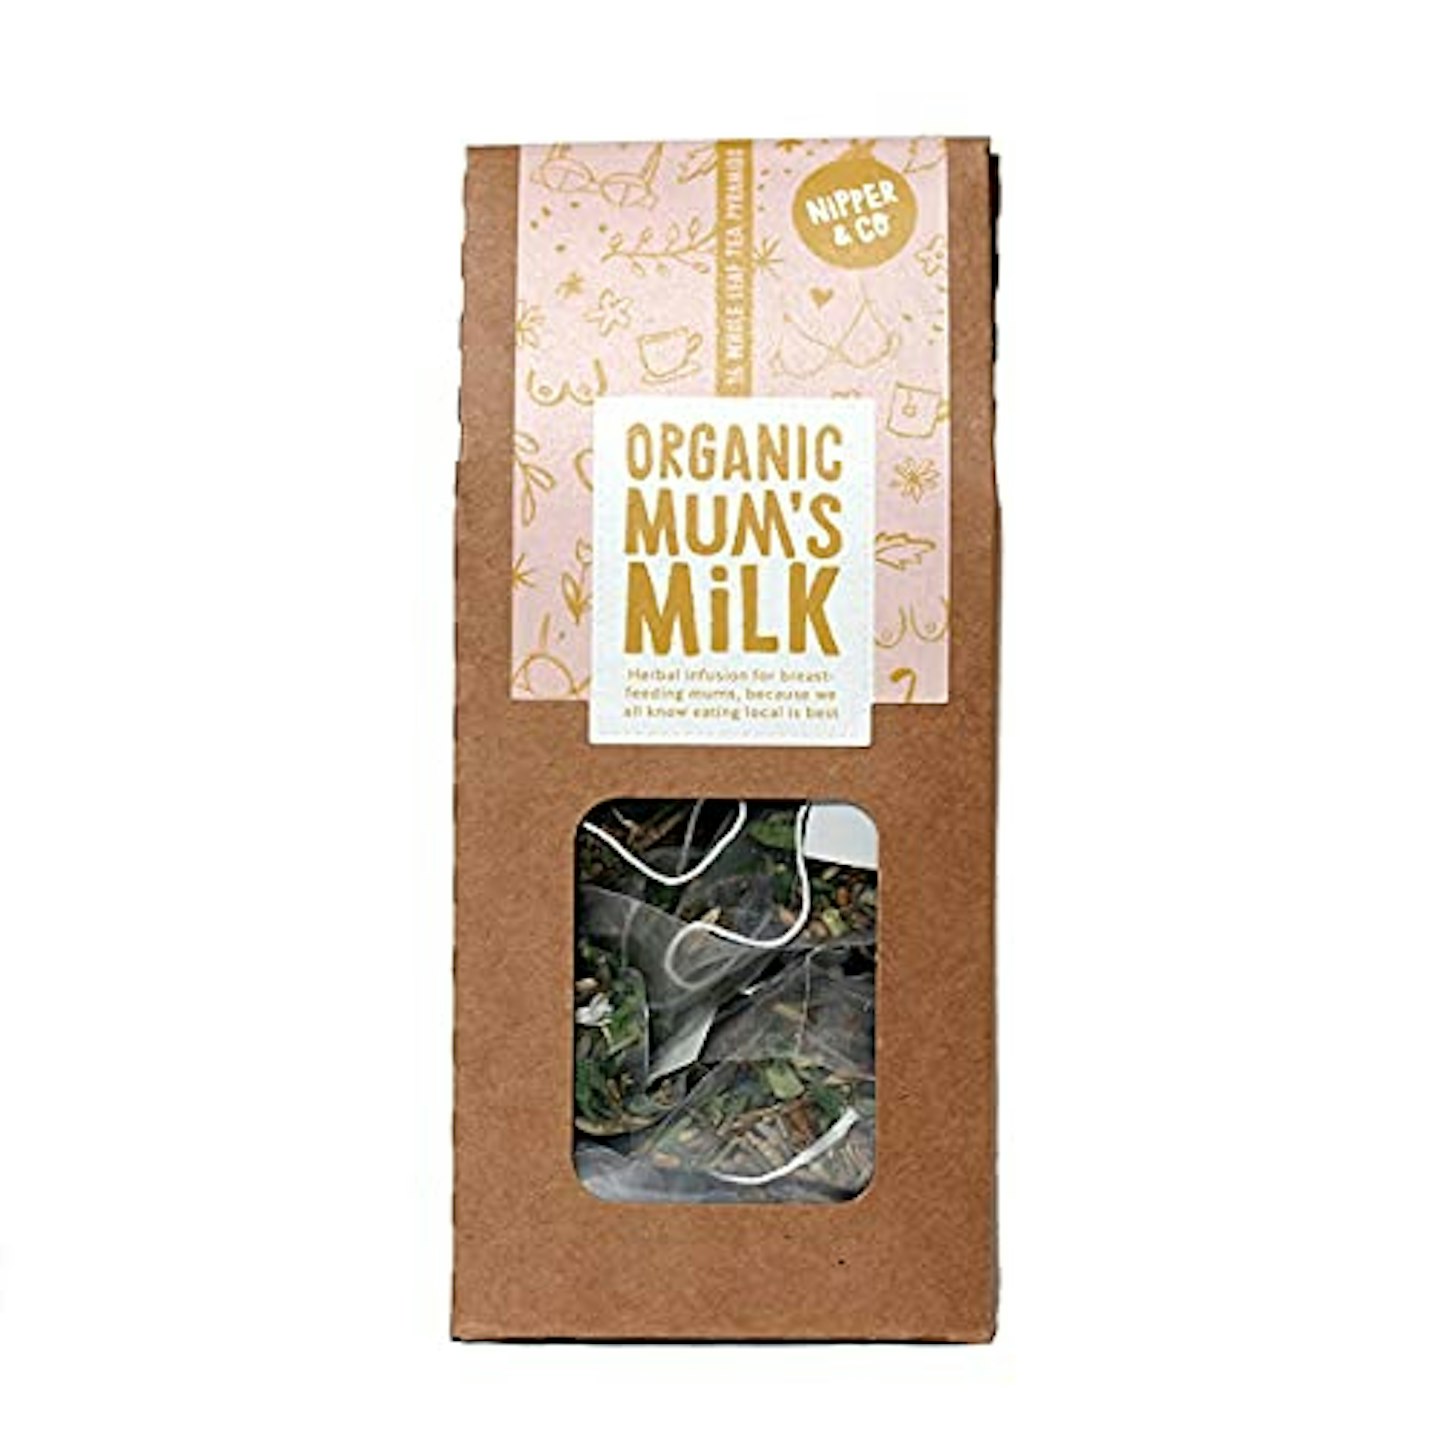 Nipper and Co Organic Mums Milk Breastfeeding Tea 